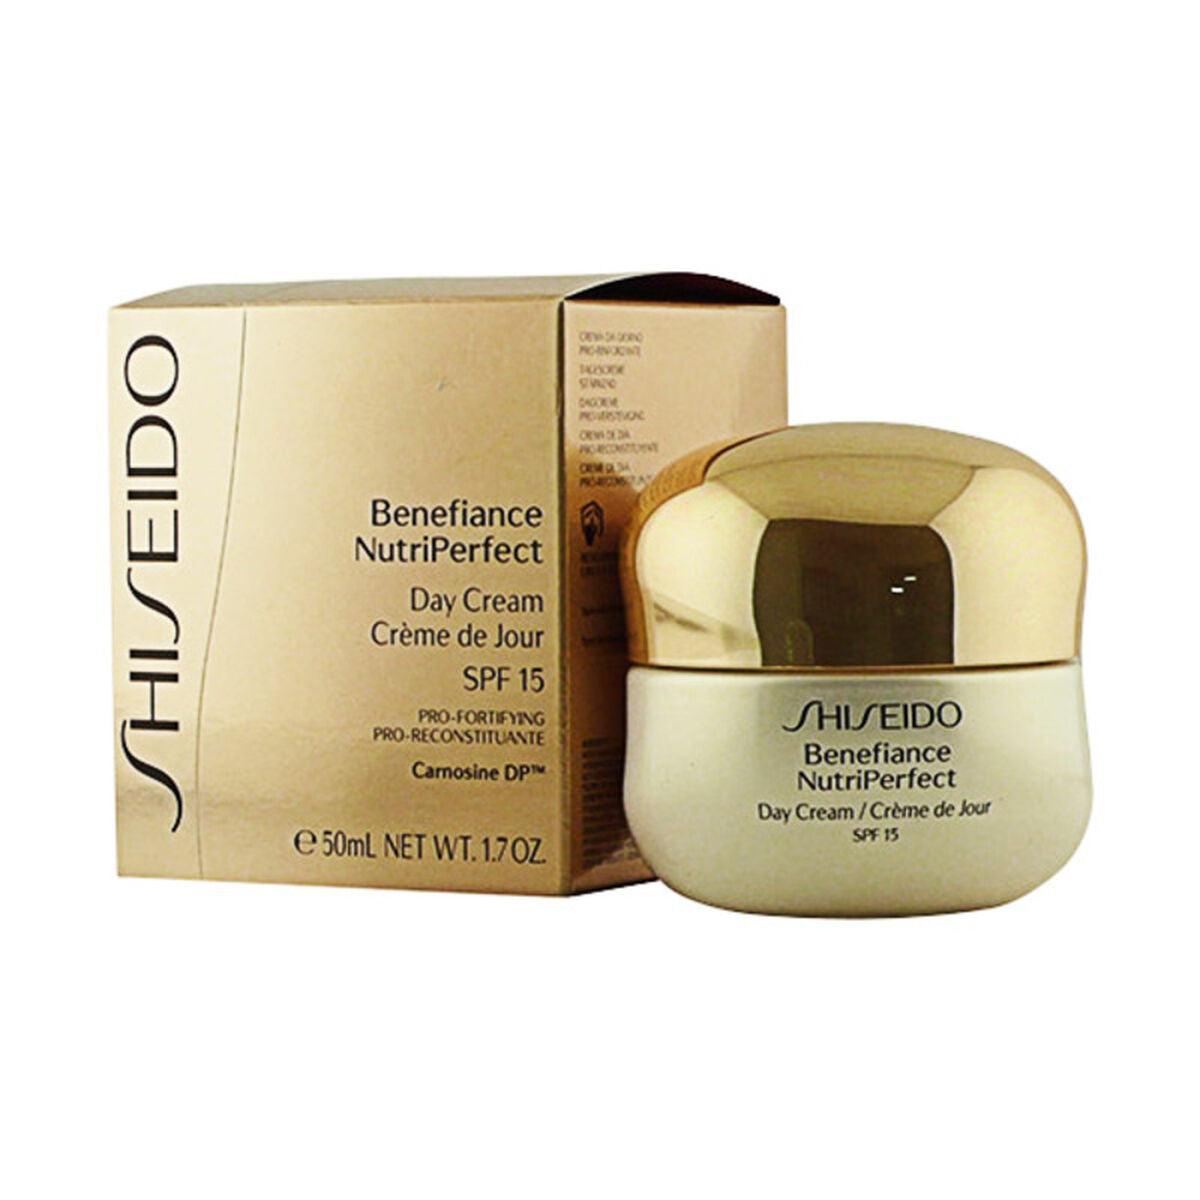 Yardım Nutriperfect Günü Shiseido (50 ml)